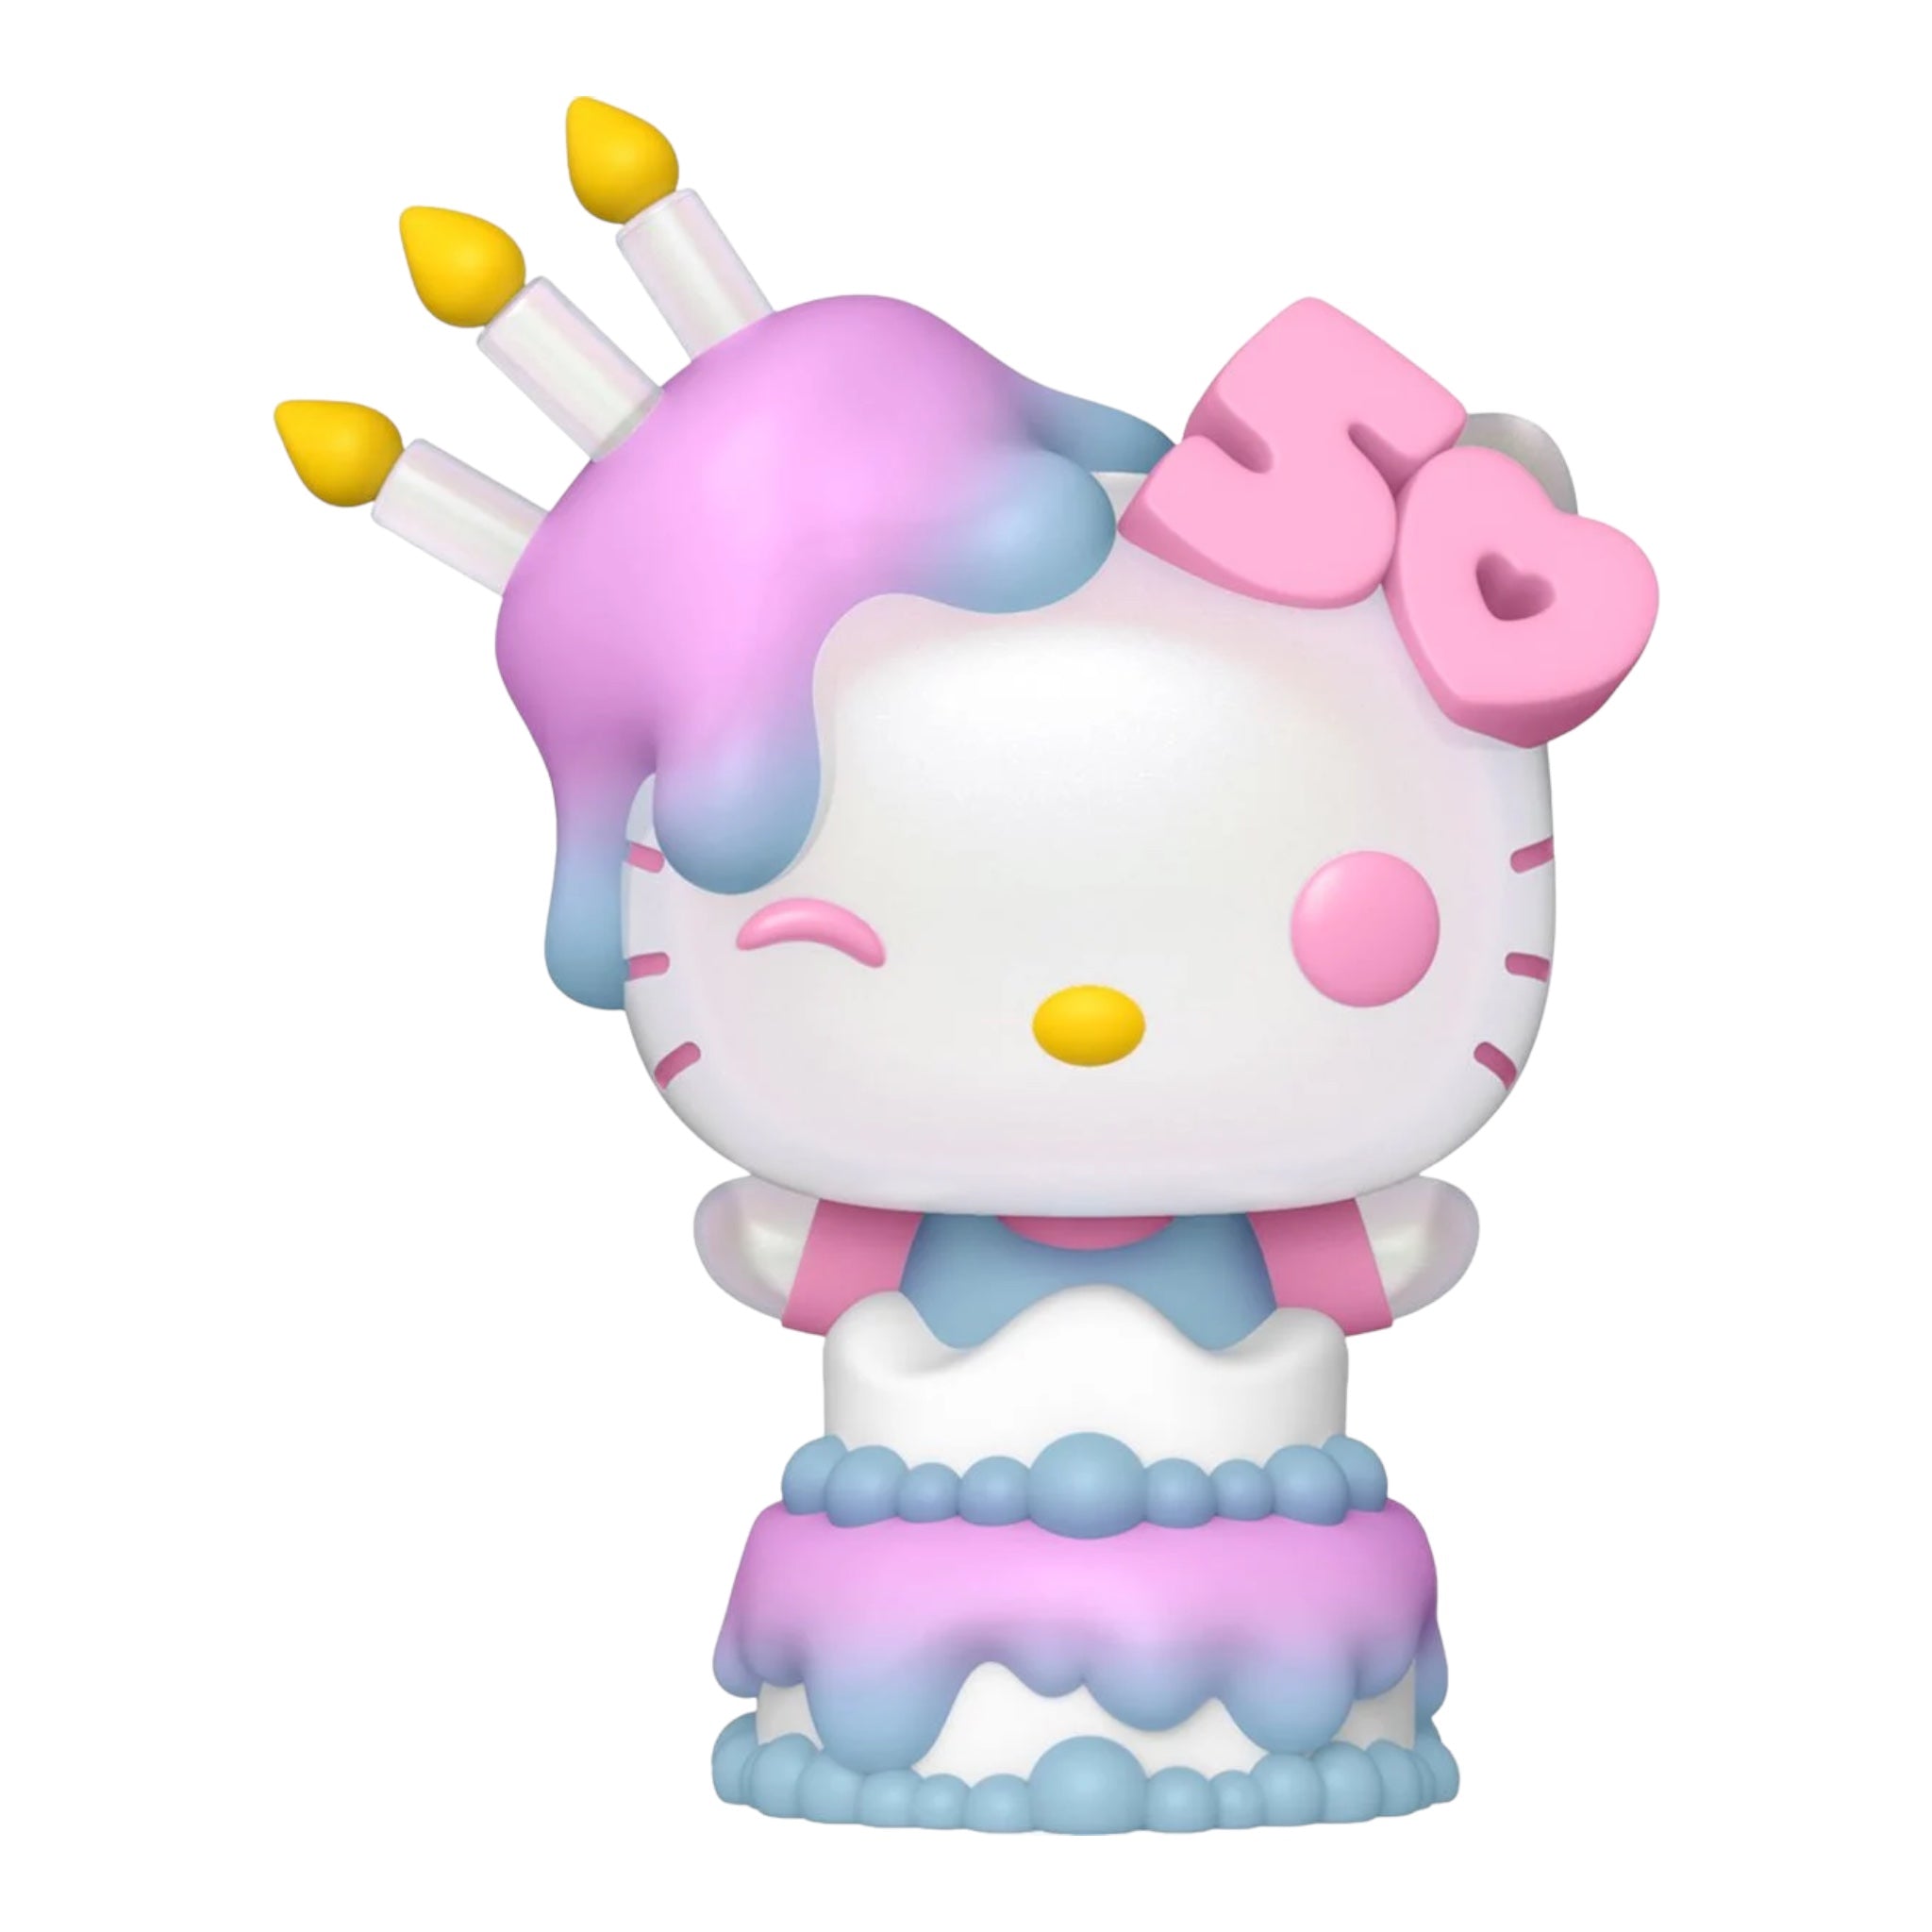 Funko Pop- Hello Kitty Nerd – Funk-o-toy